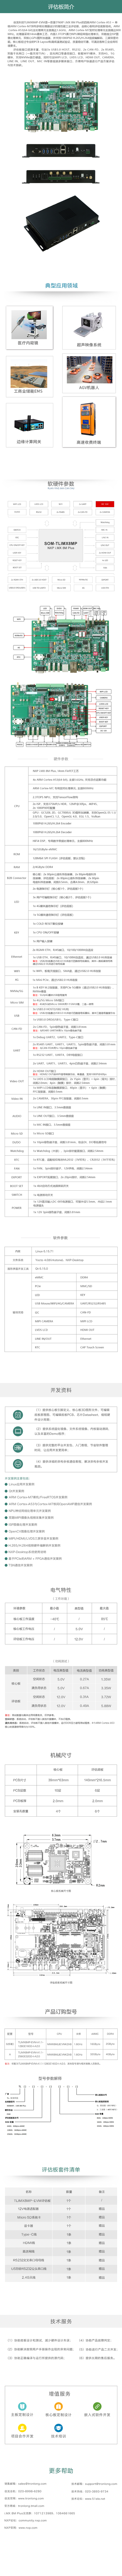 NXP|恩智浦|i.MX 8M Plus|ARM|Cortex-A53|Cortex-M7|Linux|核心板|开发板|H.264|H.265